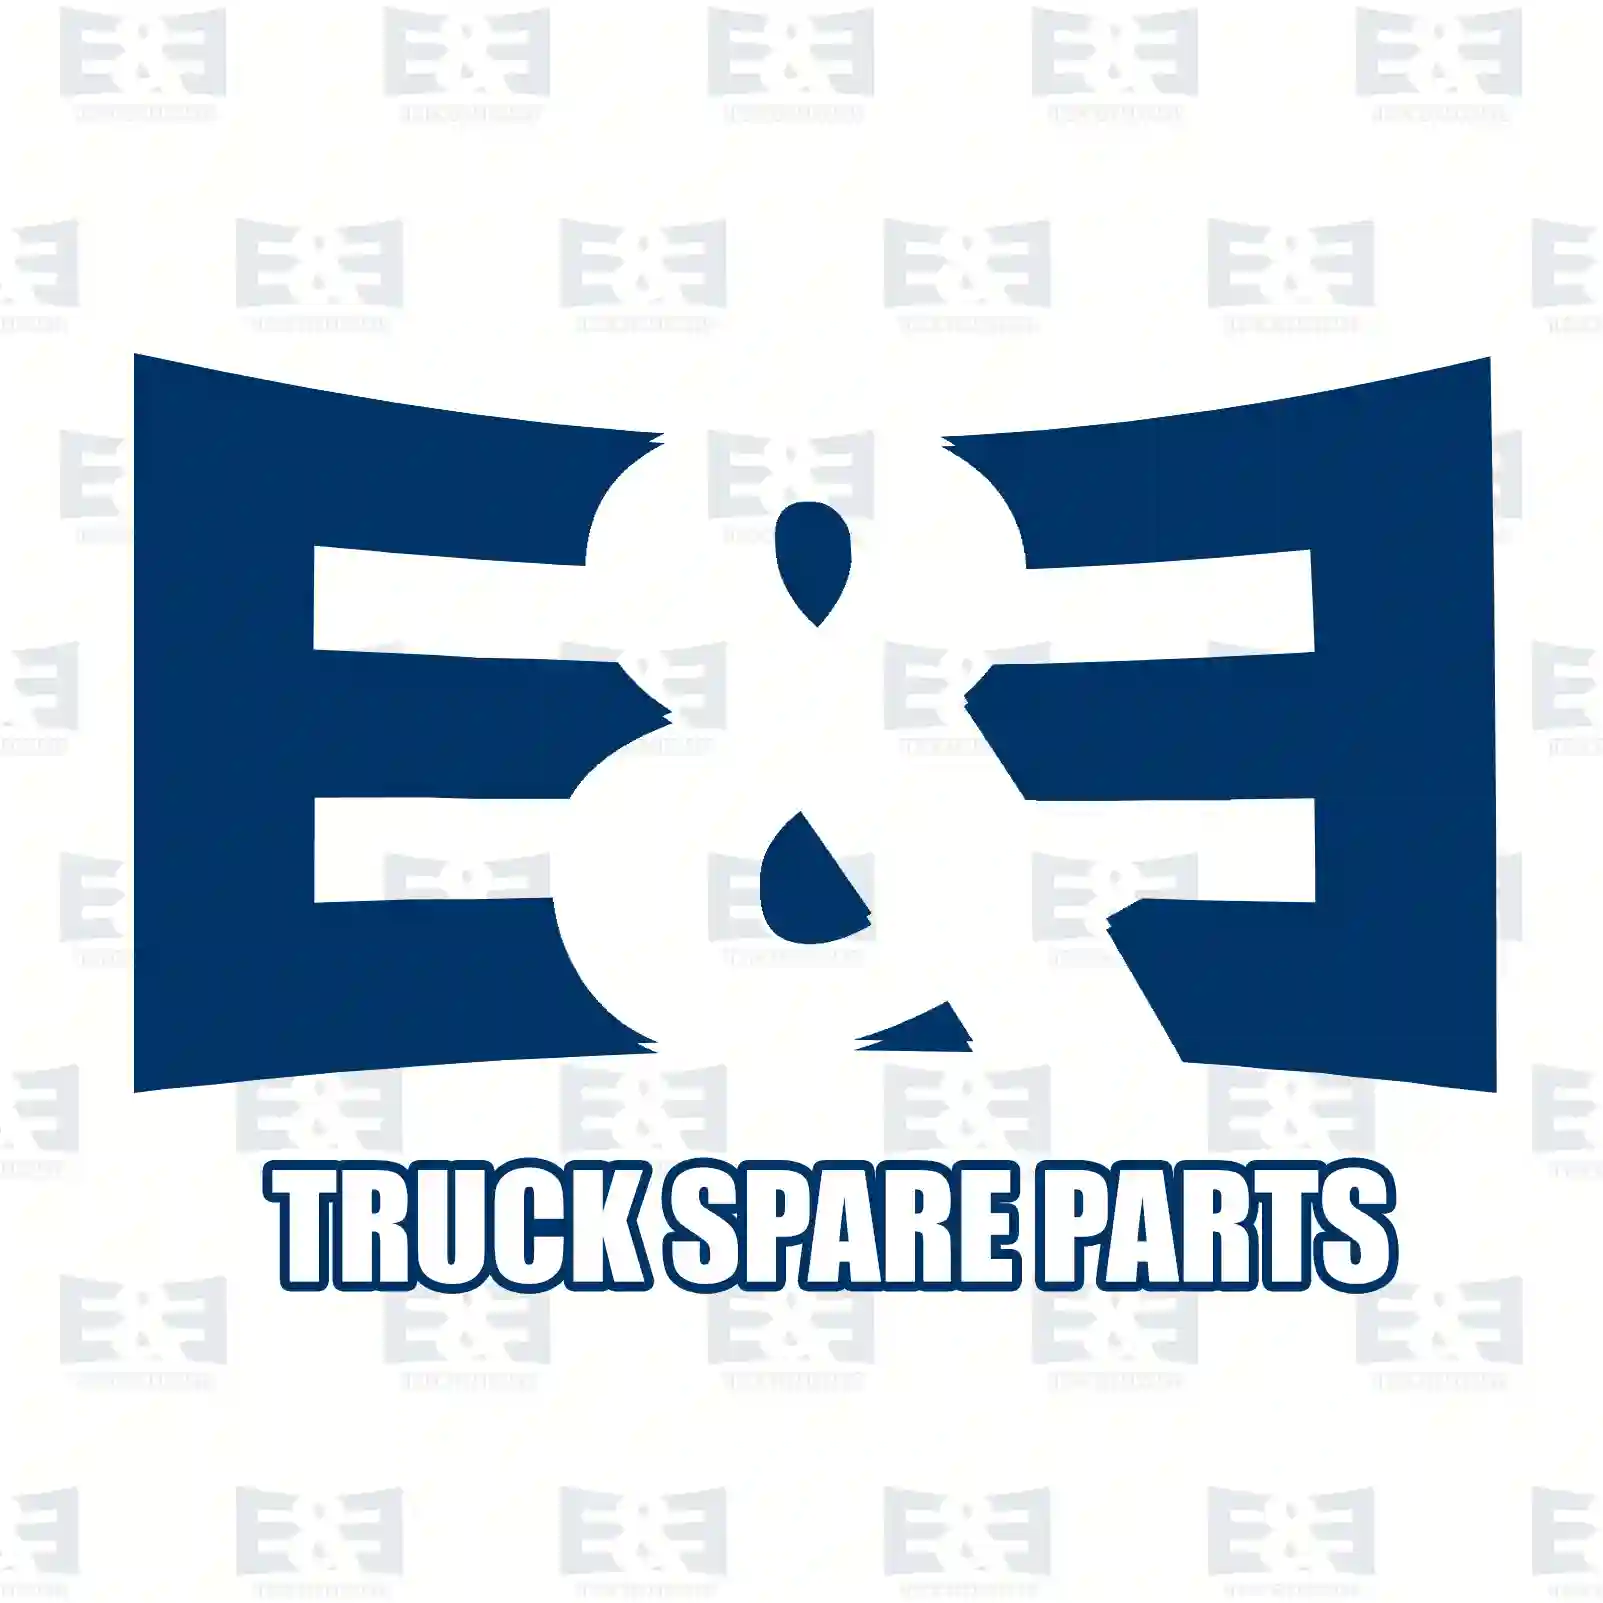 Suspension Buffer stop, EE No 2E2283793 ,  oem no:81962100619 E&E Truck Spare Parts | Truck Spare Parts, Auotomotive Spare Parts